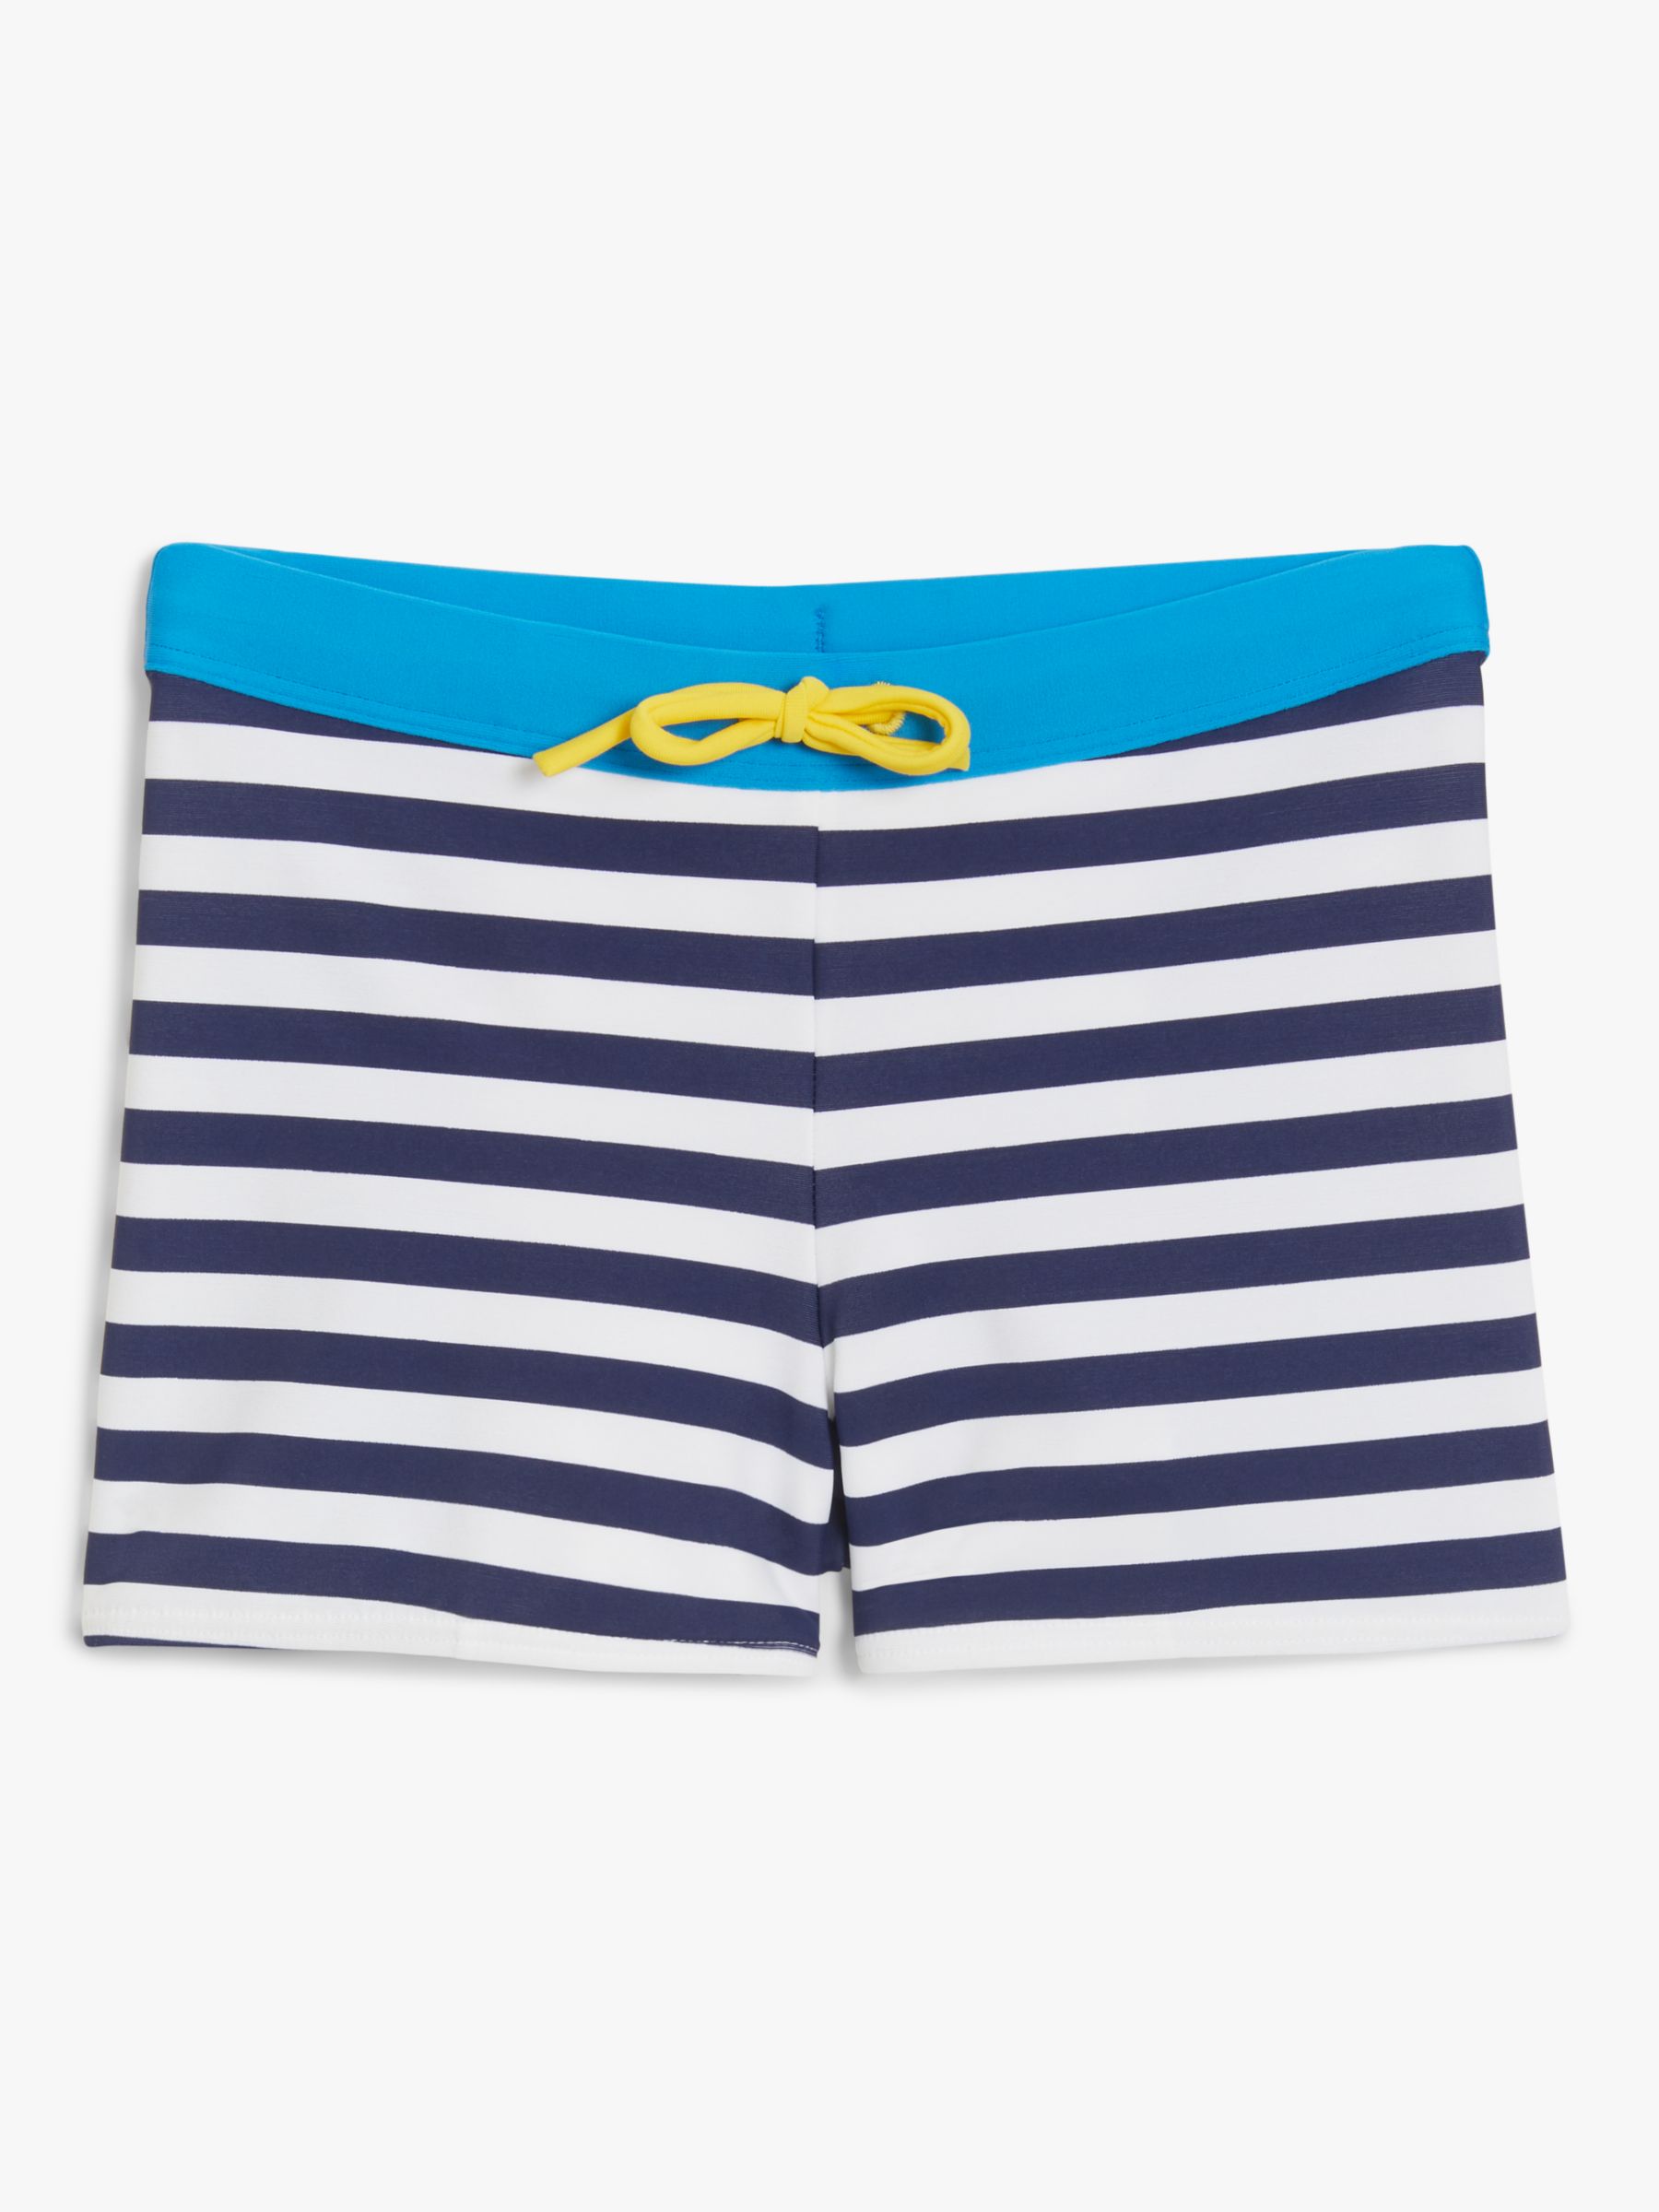 John Lewis Boys' Stripe Print Swimming Trunks, Blue